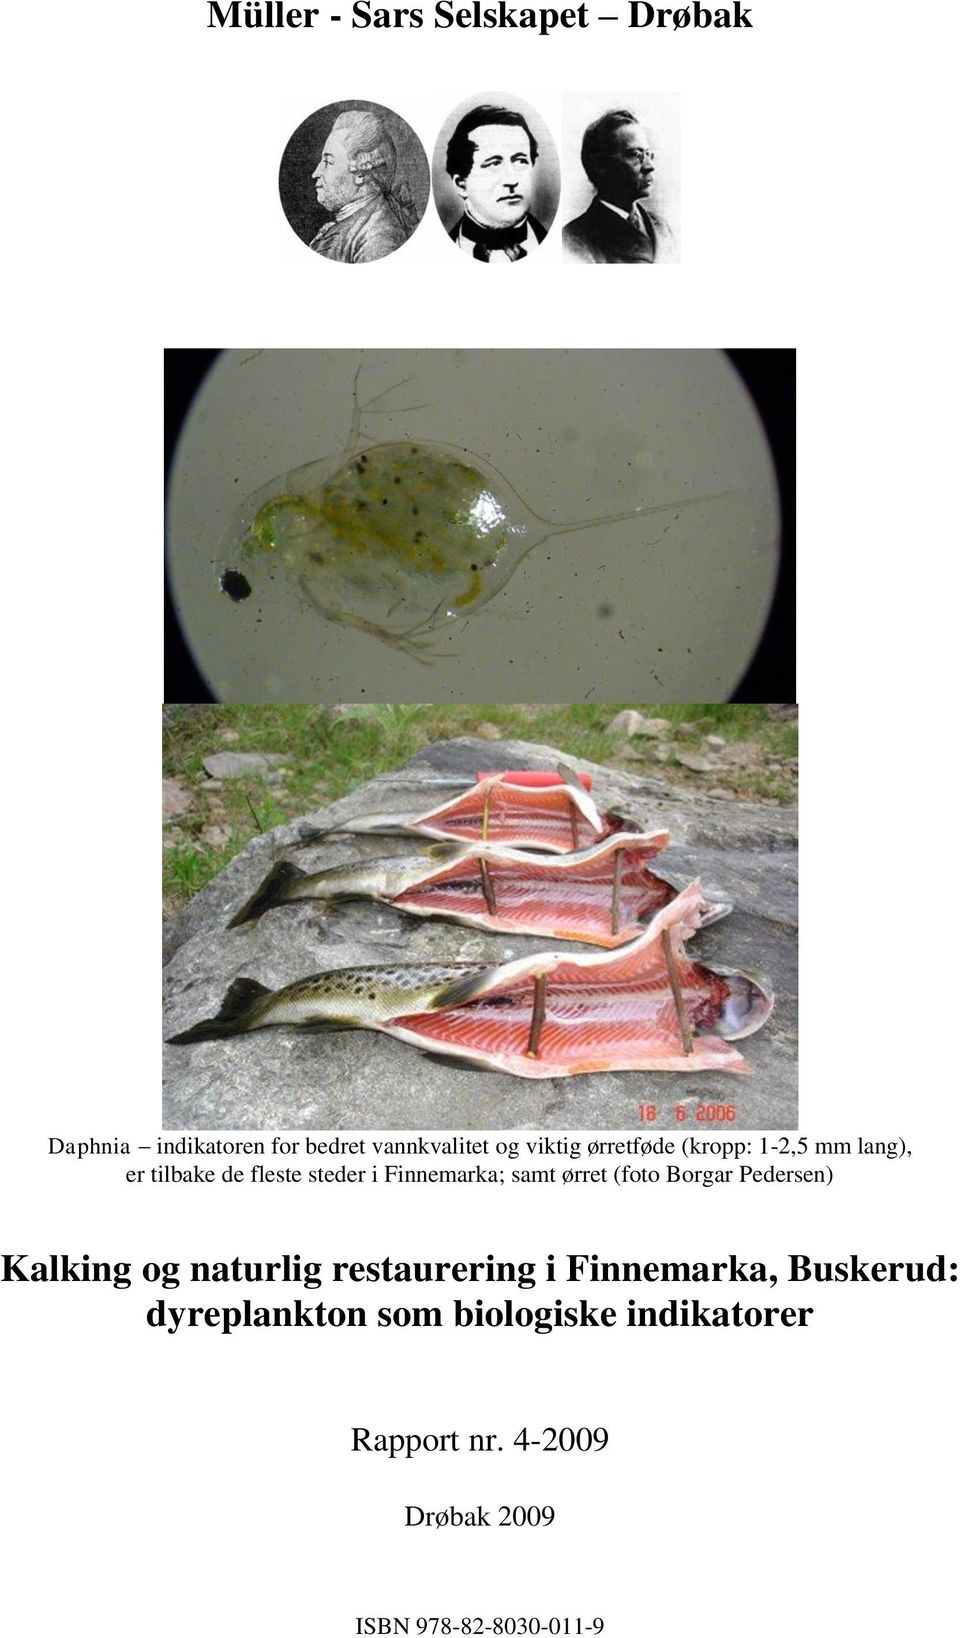 (foto Borgar Pedersen) Kalking og naturlig restaurering i Finnemarka, Buskerud: